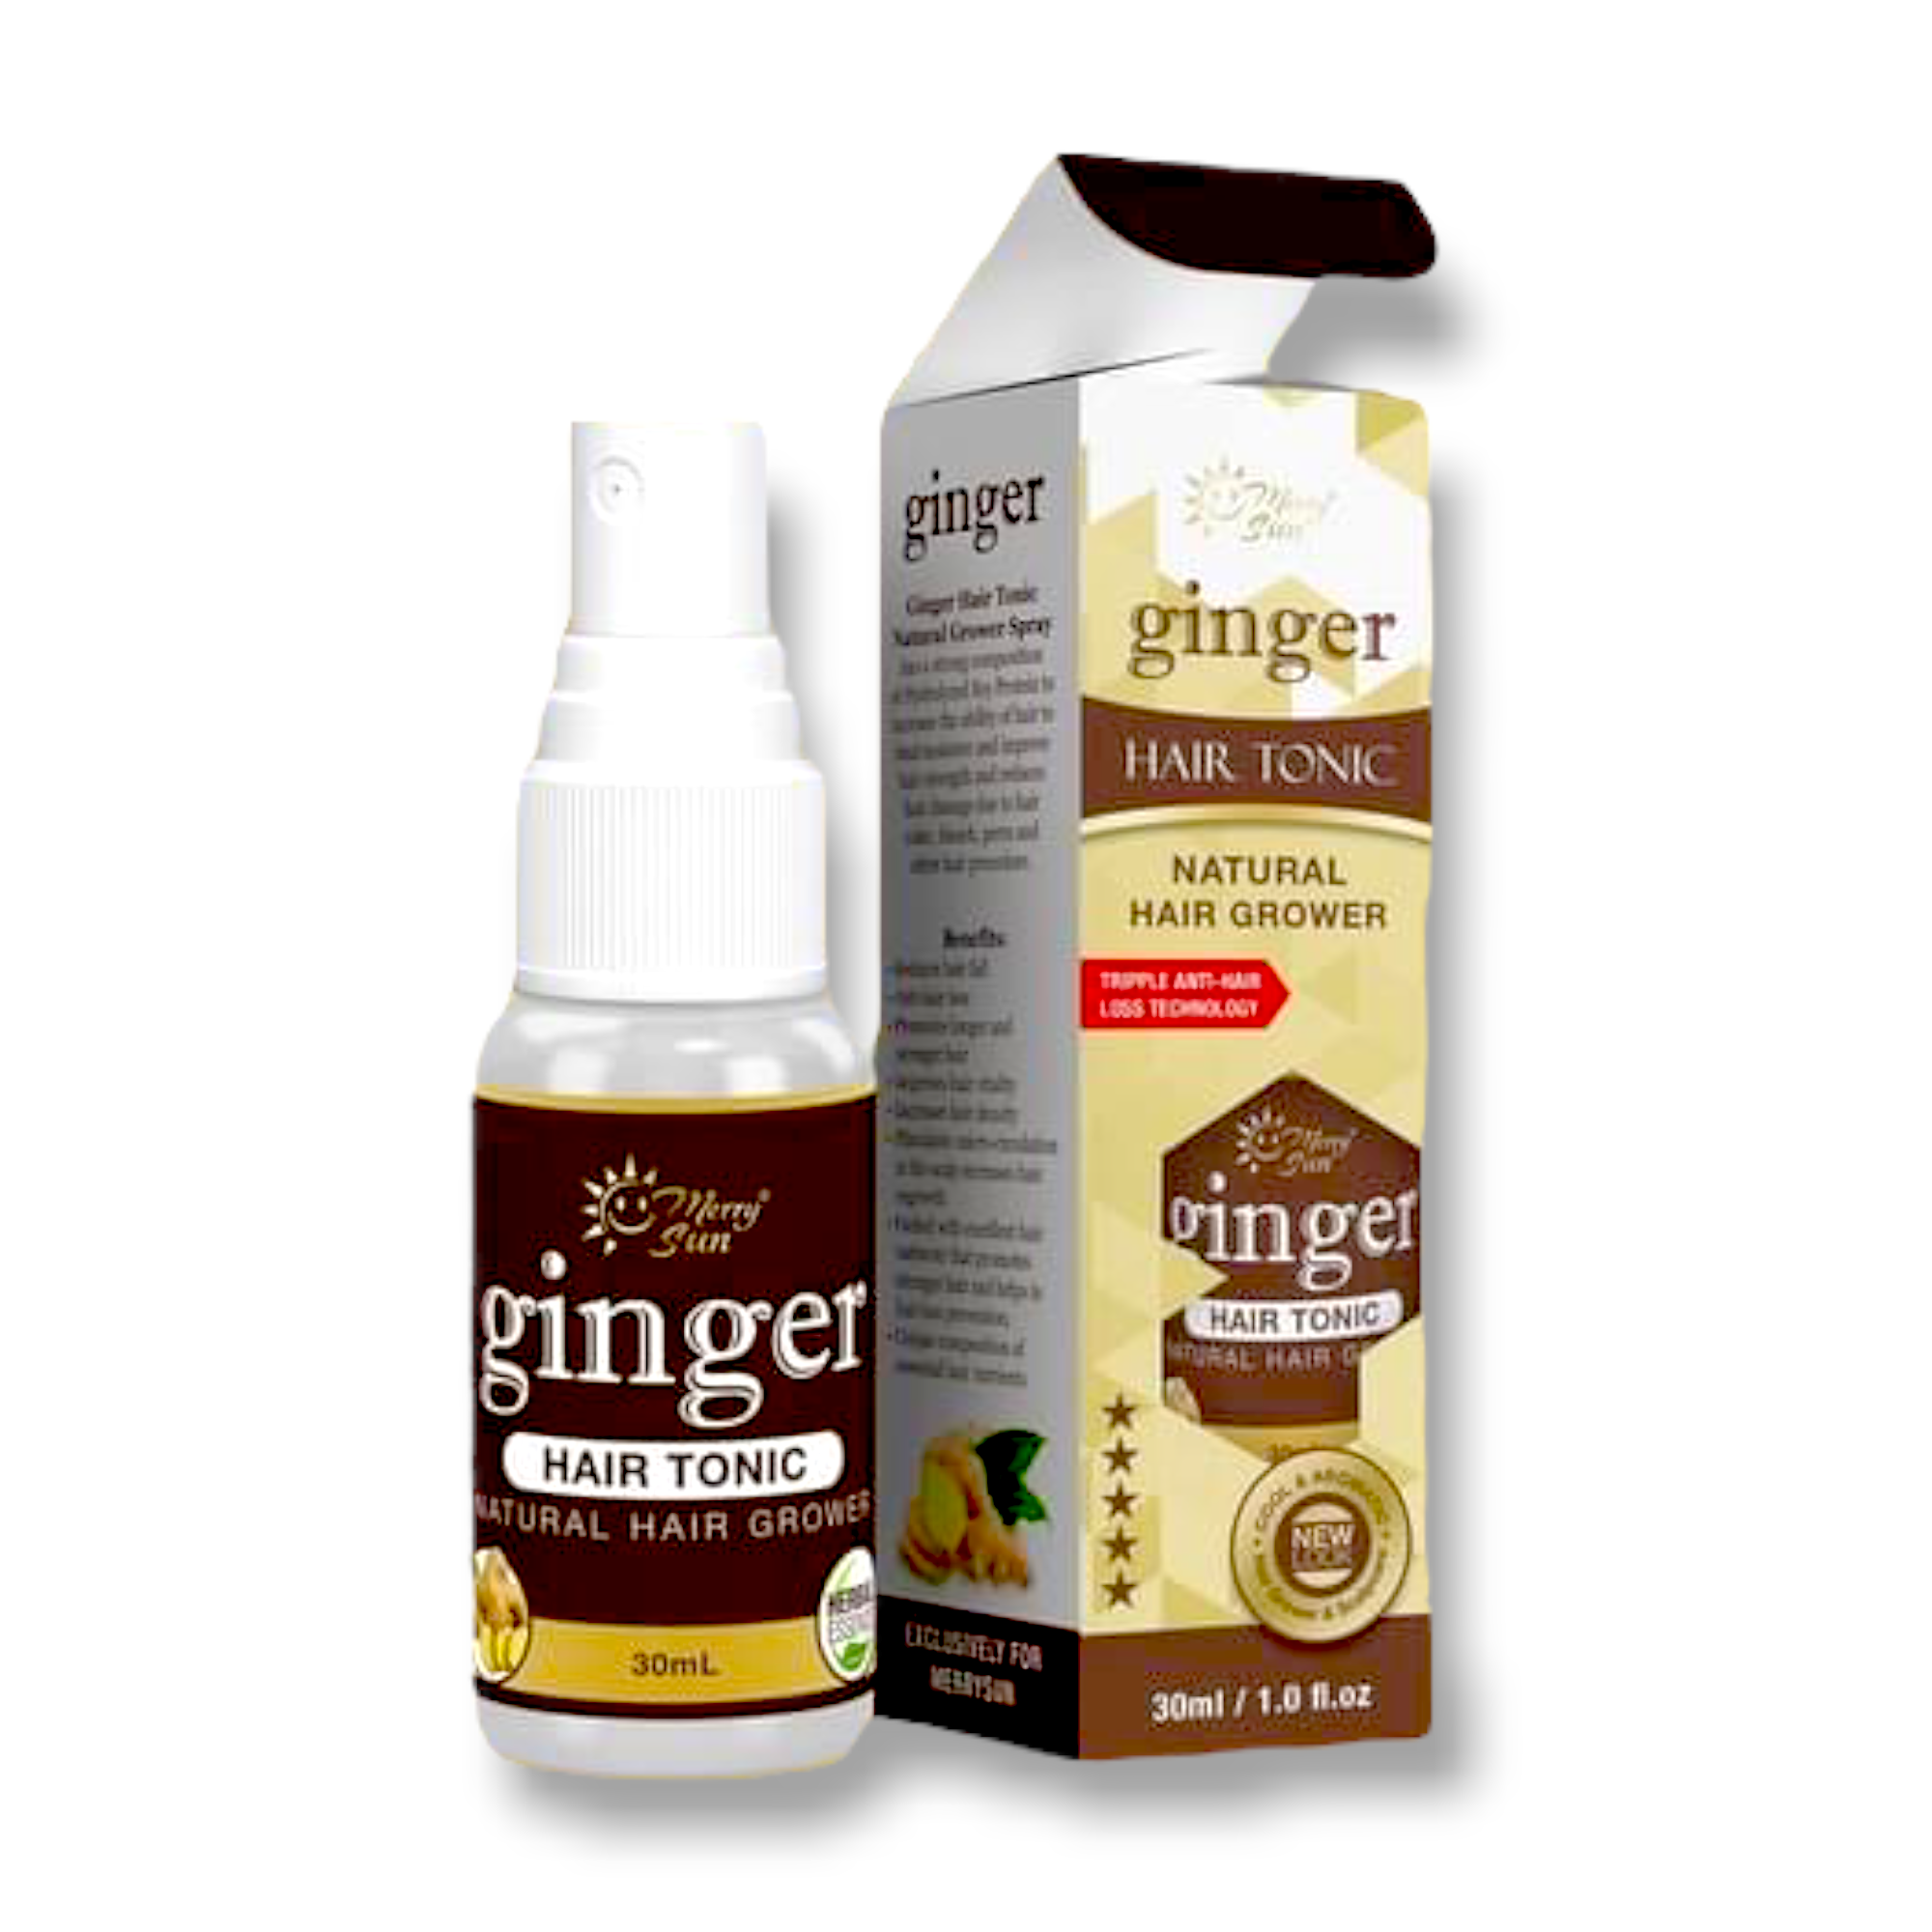 Merry Sun - Ginger Hair Tonic Natural Grower Spray 30ml